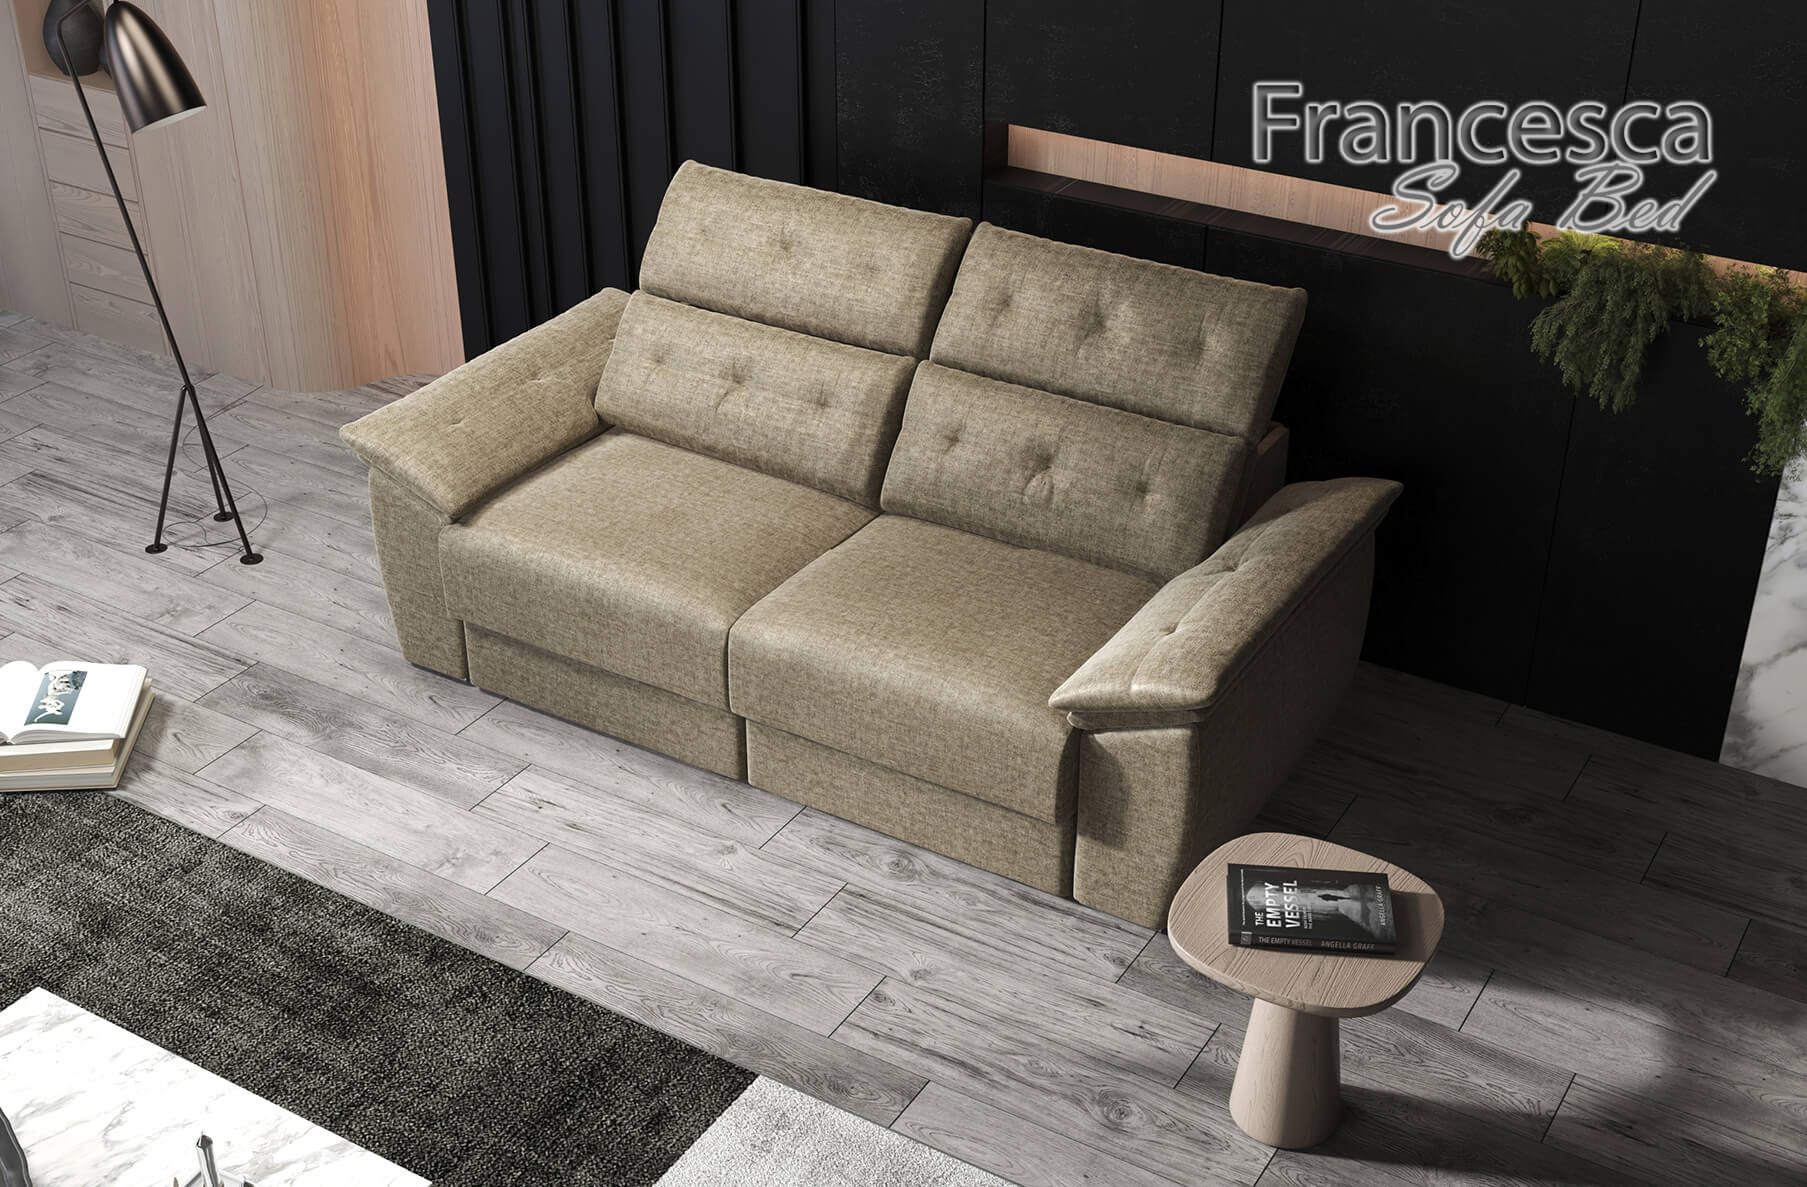 Francesca sofa bed, Cheap